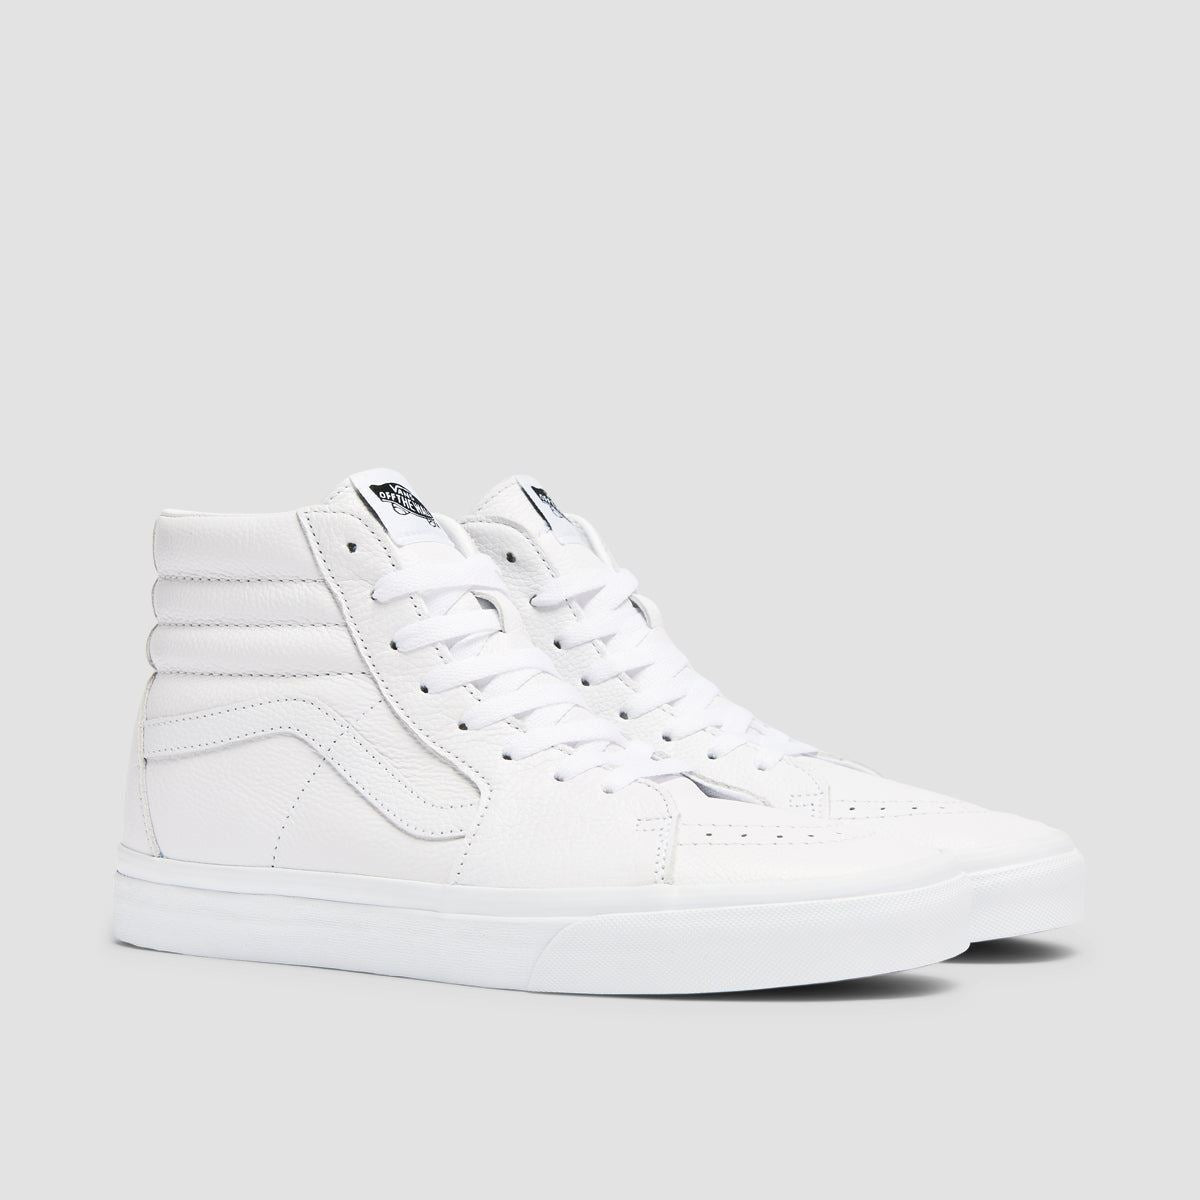 Vans SK8-Hi High Top Shoes - Leather True White/True White